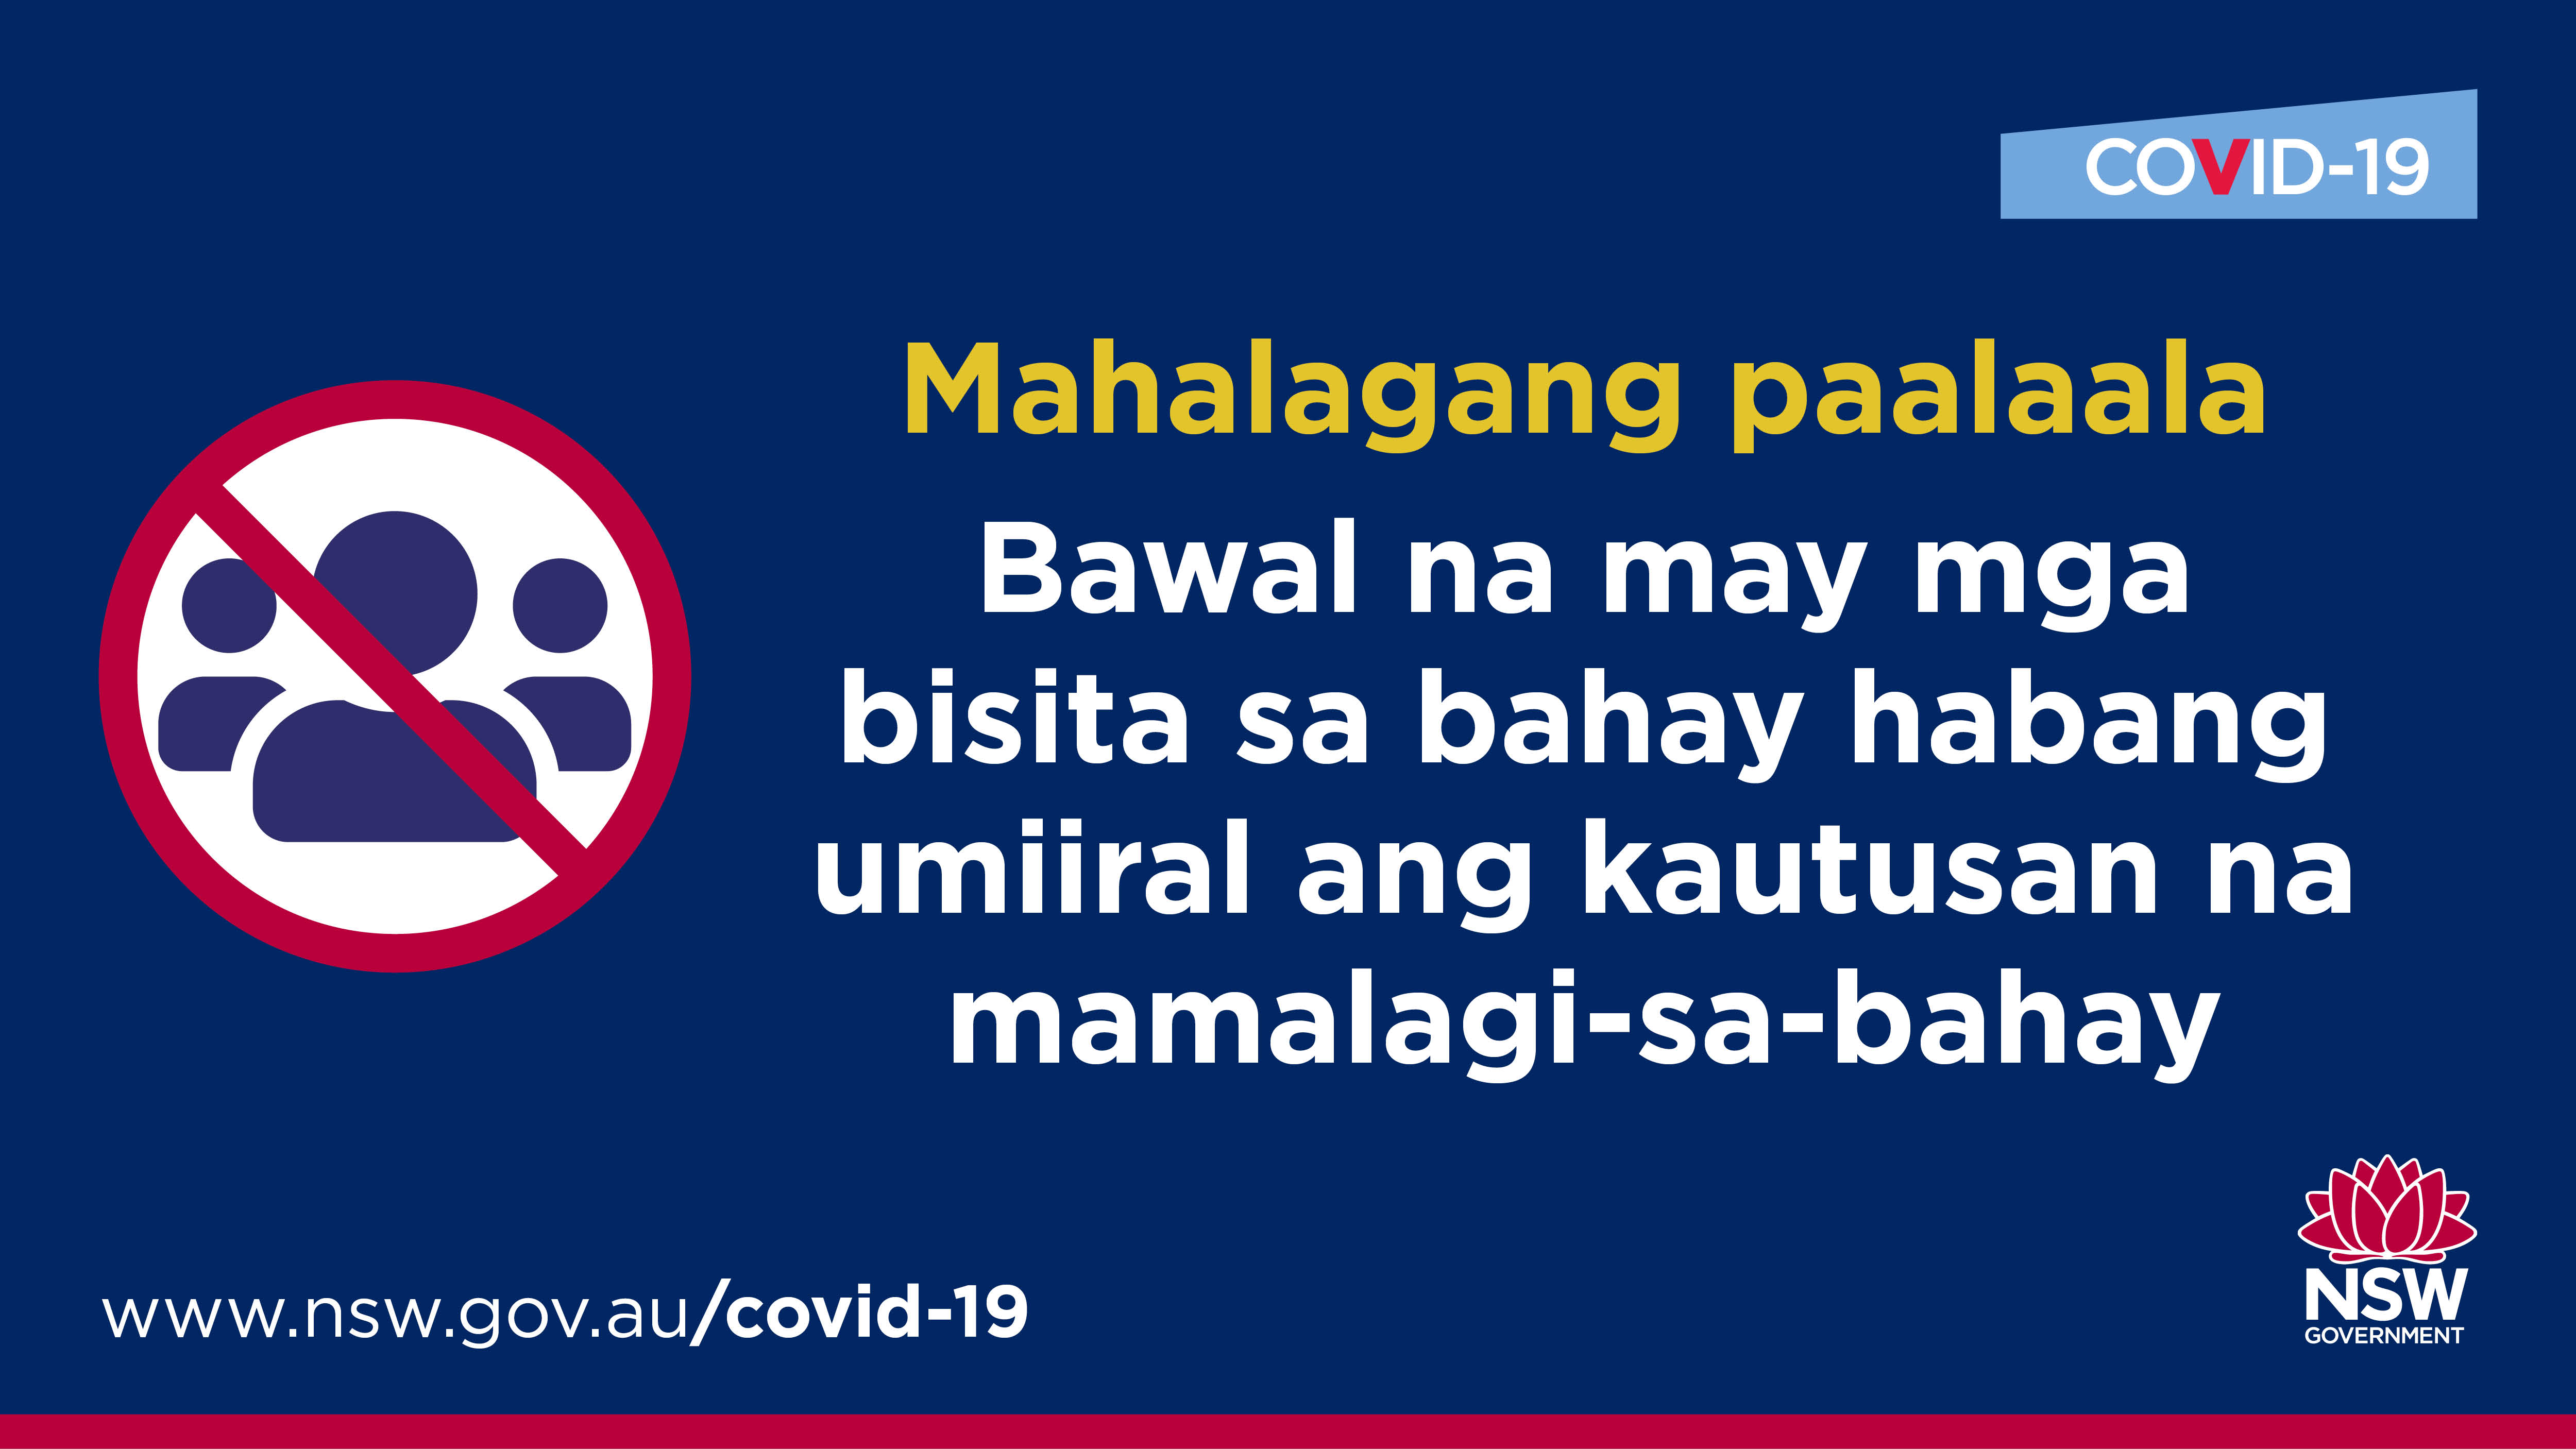 covid 19 opinion essay tagalog